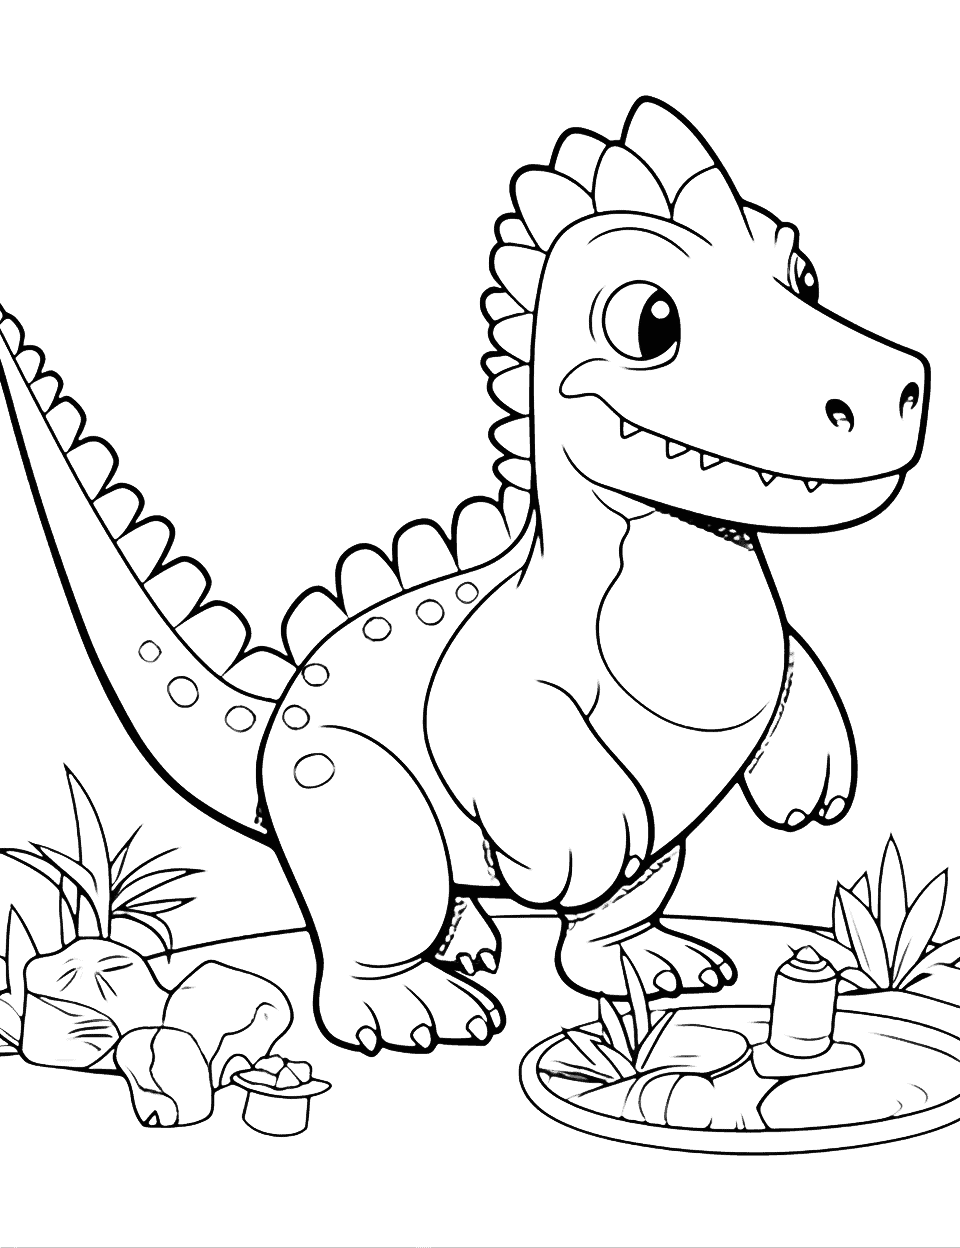 Preschool Dino Pal Dinosaur Coloring Page - Cartoonish, preschool-friendly dinosaur having a meal.